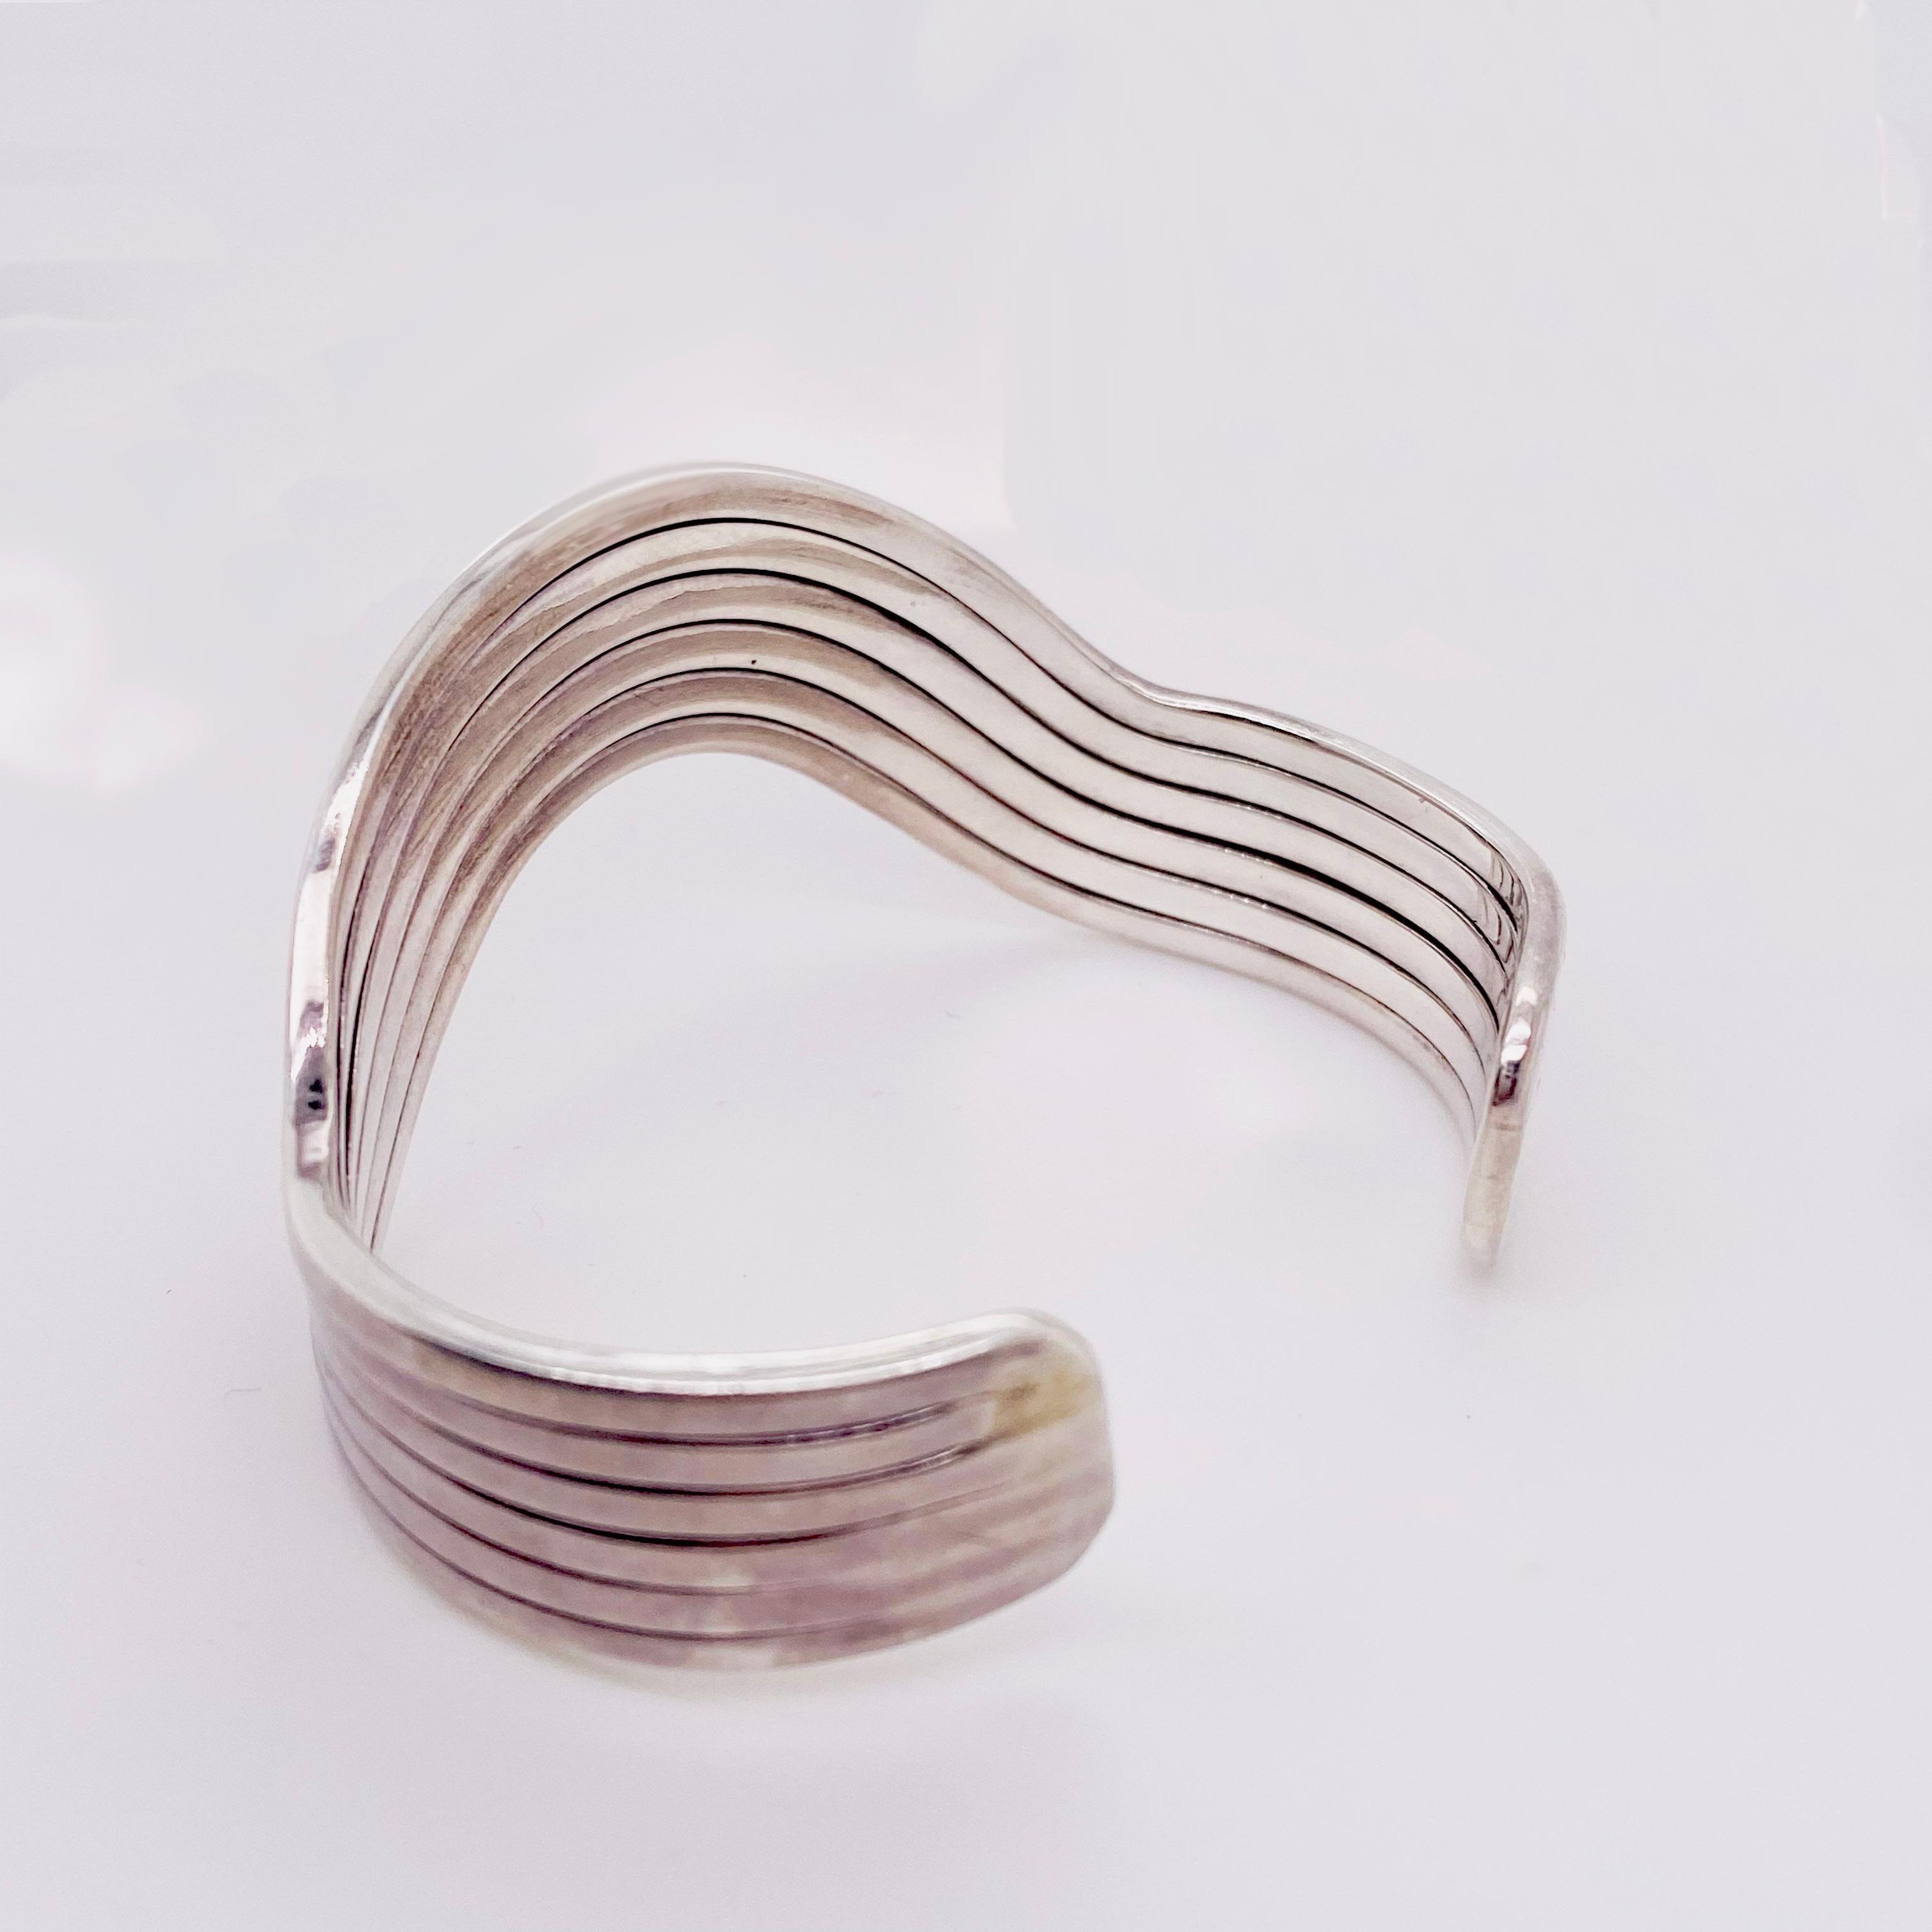 Artisan Heavy Curved Cuff Handmade in Sterling Silver, 53 Grams, Medium Size Wrist